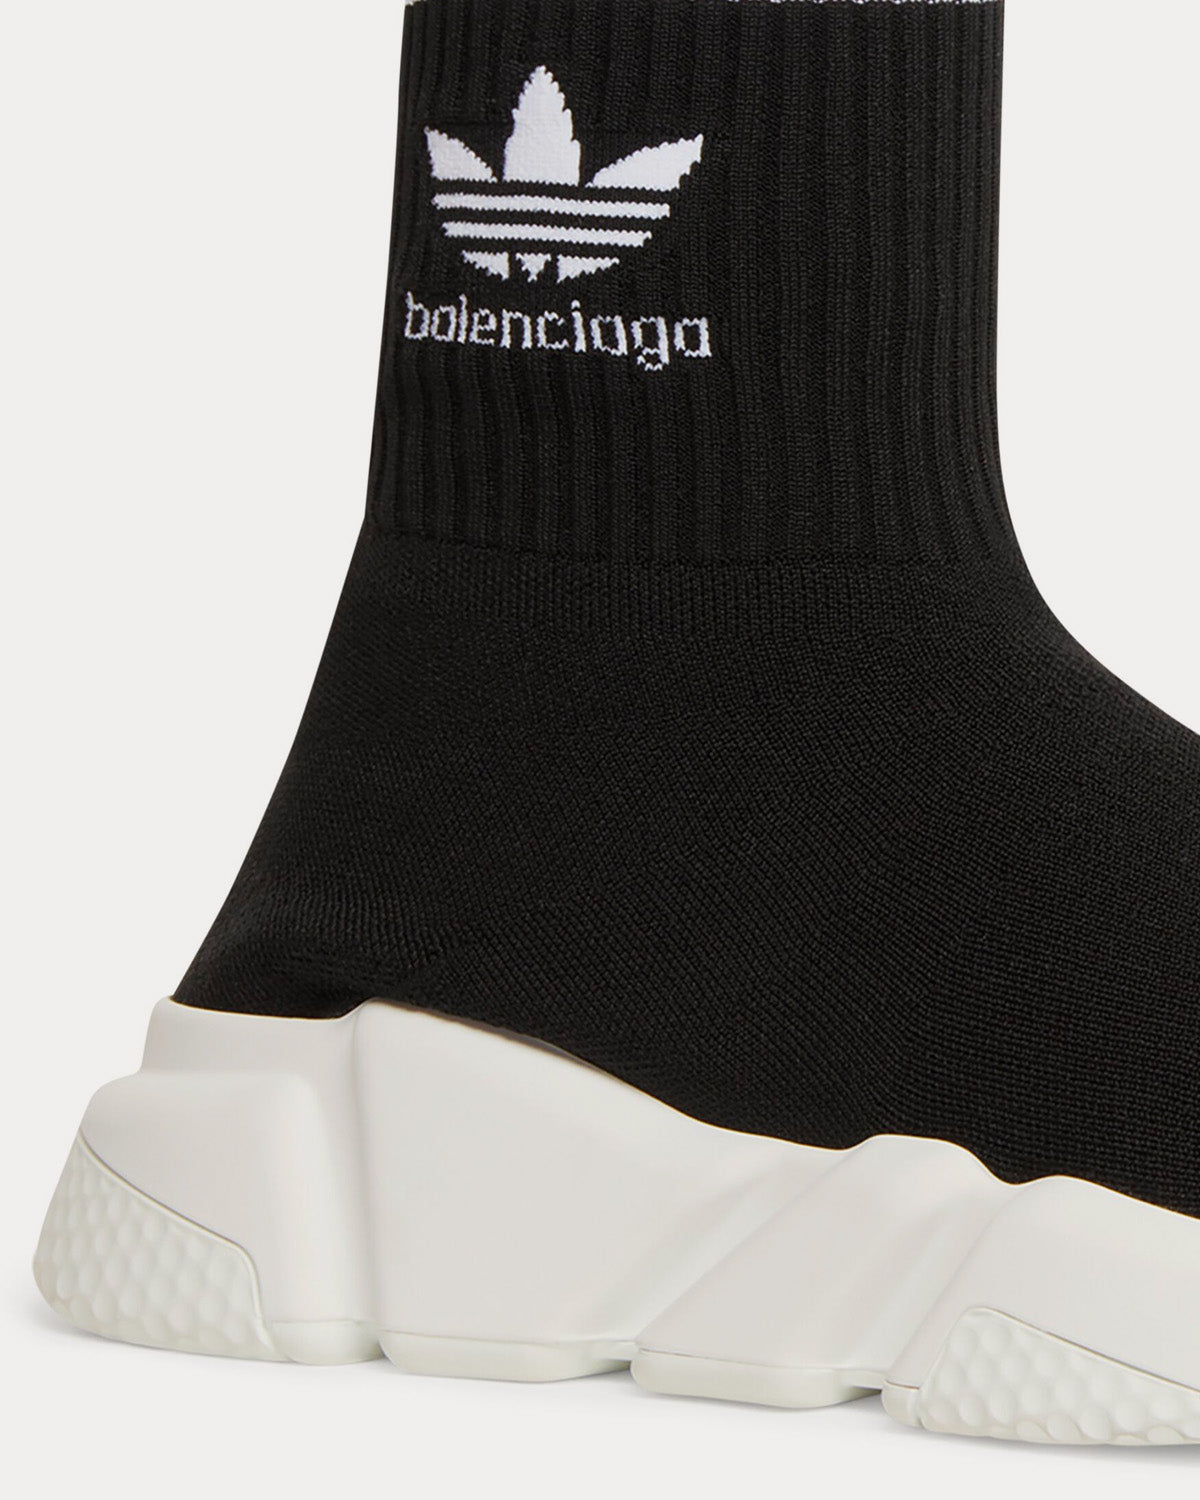 Balenciaga x Adidas - Speed Knit Black High Top Sneakers